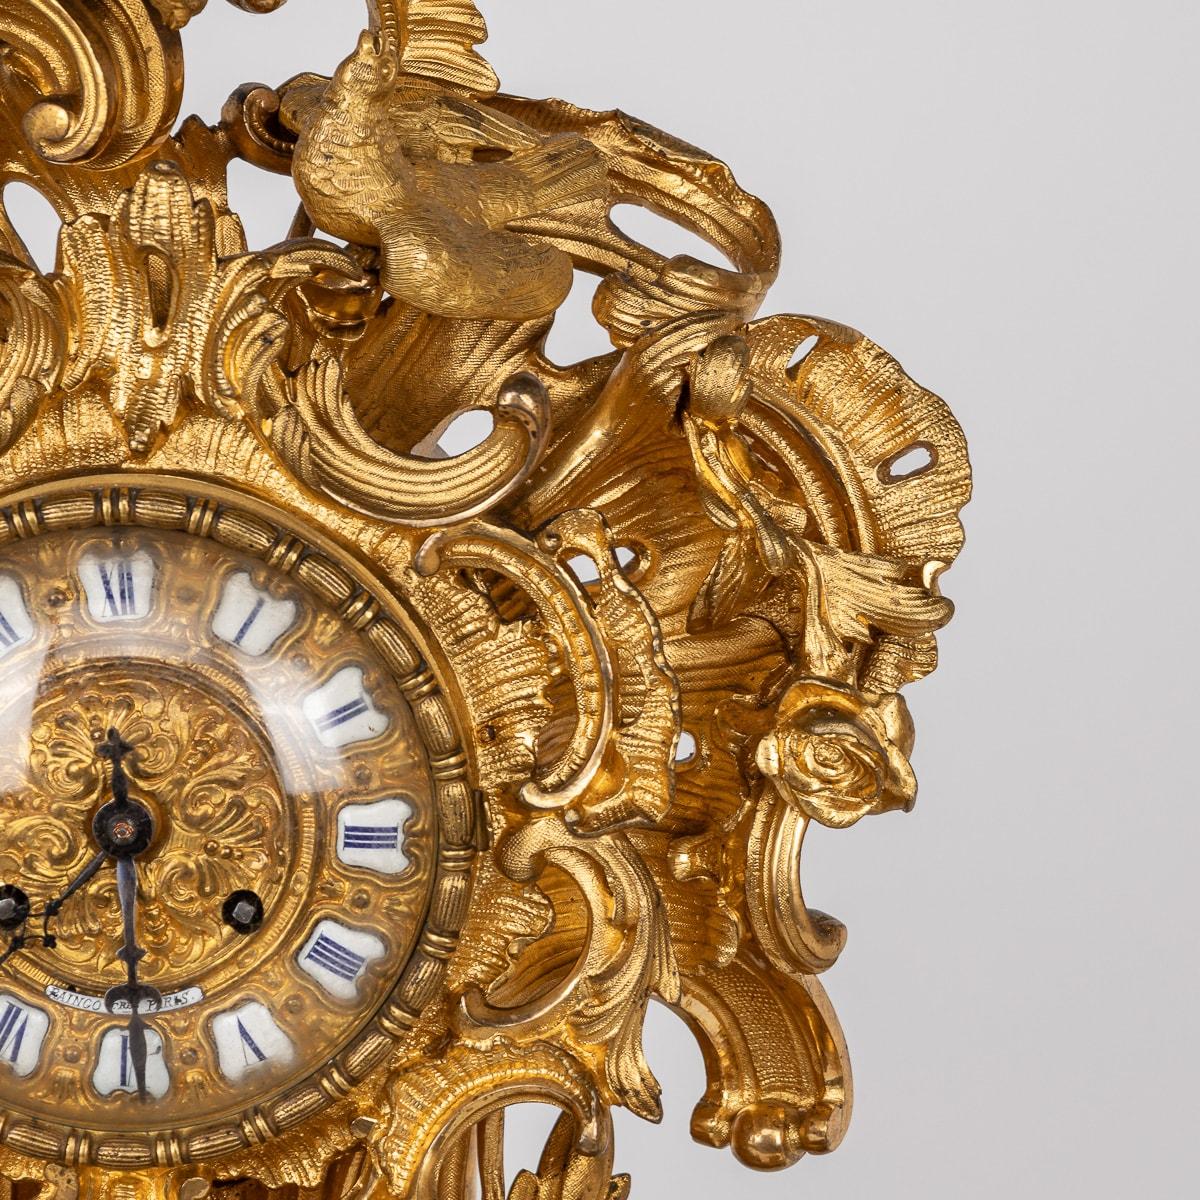 Antique 19th Century French Gilt Bronze Clock, Raingo Freres, Paris c.1850 For Sale 1